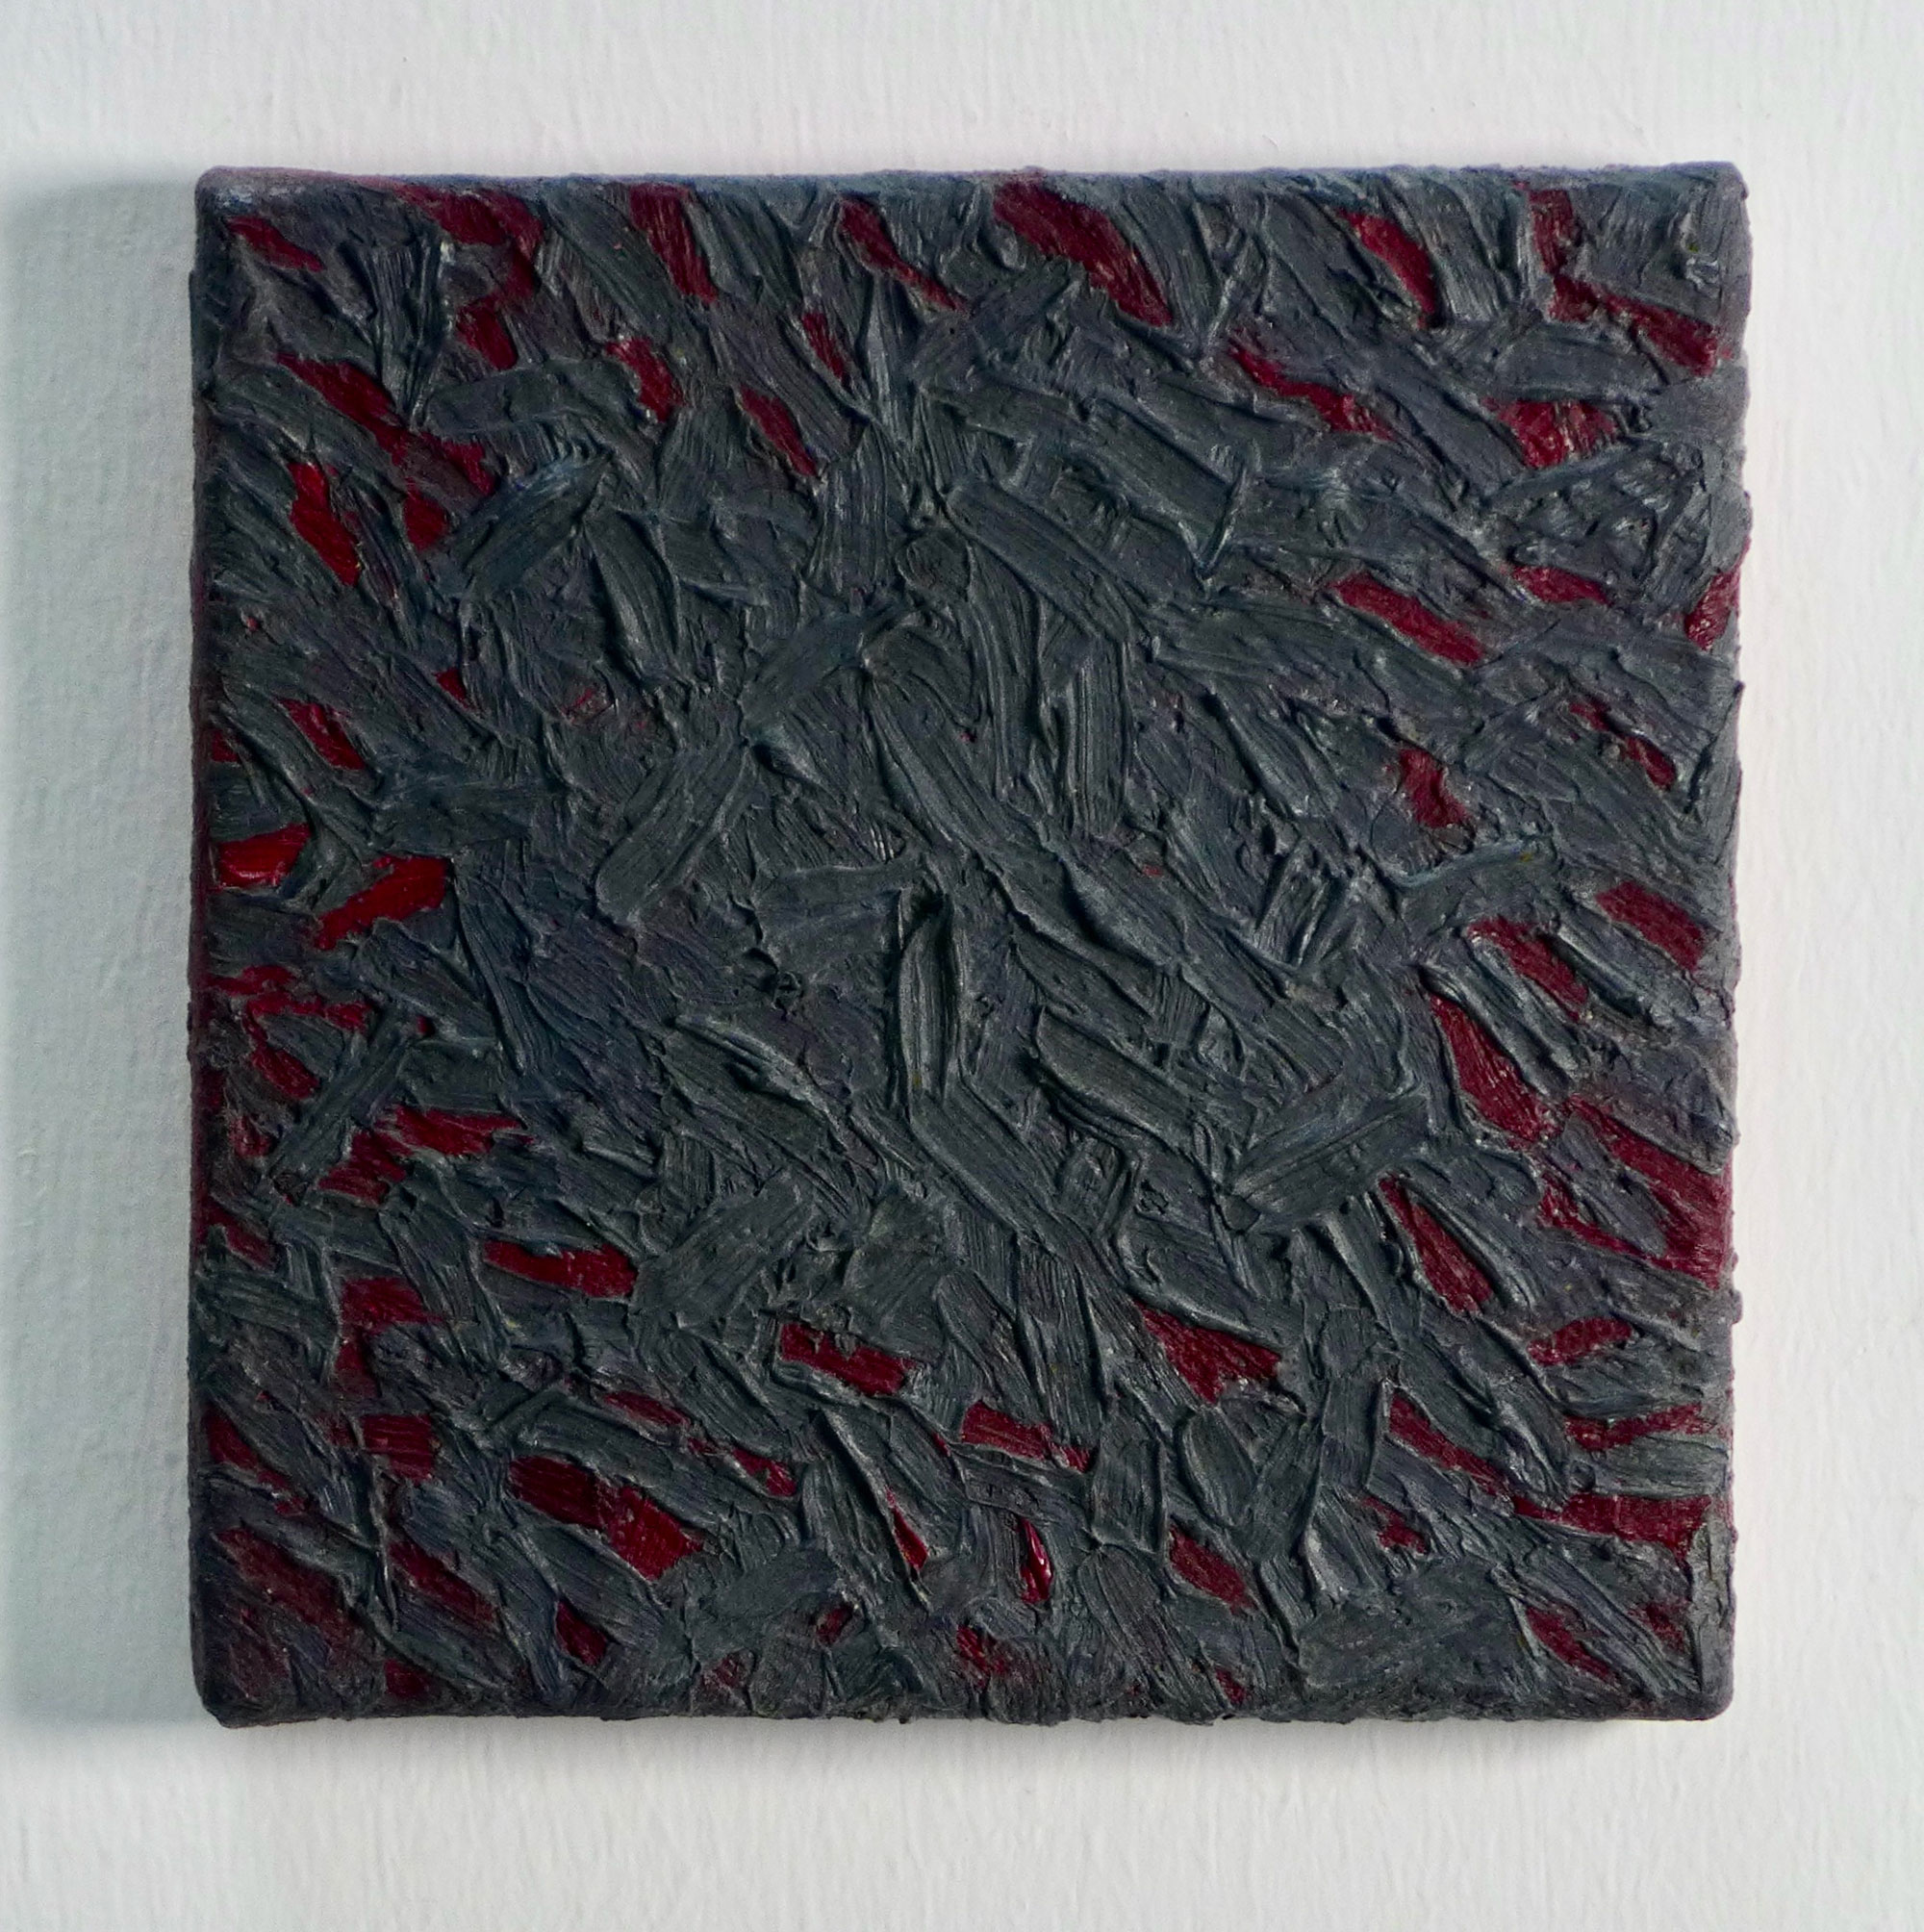 Kenneth Dingwall, Time grey I, 1976, oil and wax on canvas, 12.5cm x 12.5cm